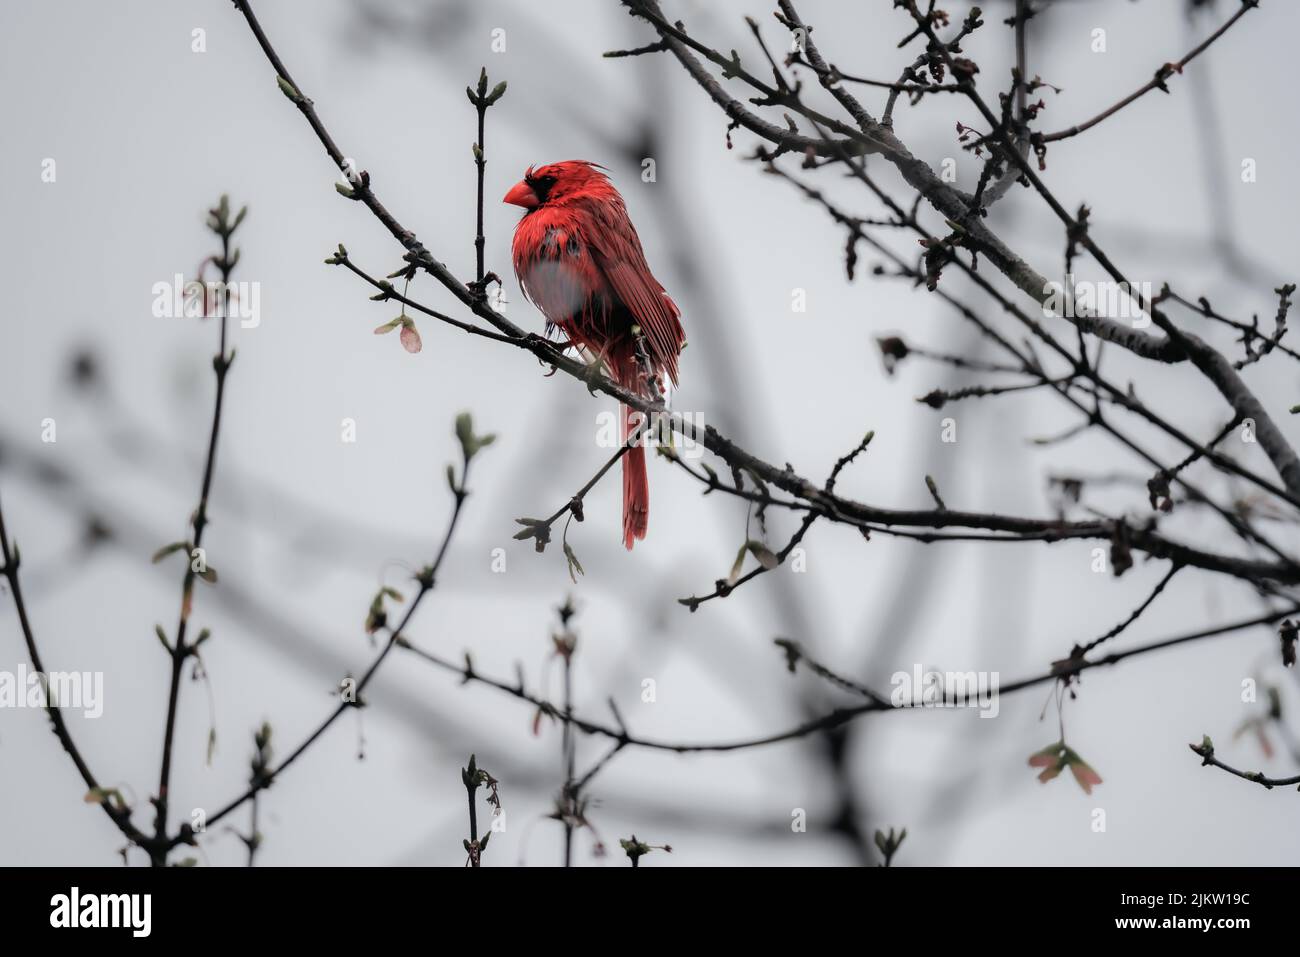 A shallow focus of a red cardinal (Cardinalis cardinalis) perched on the tree branch Stock Photo